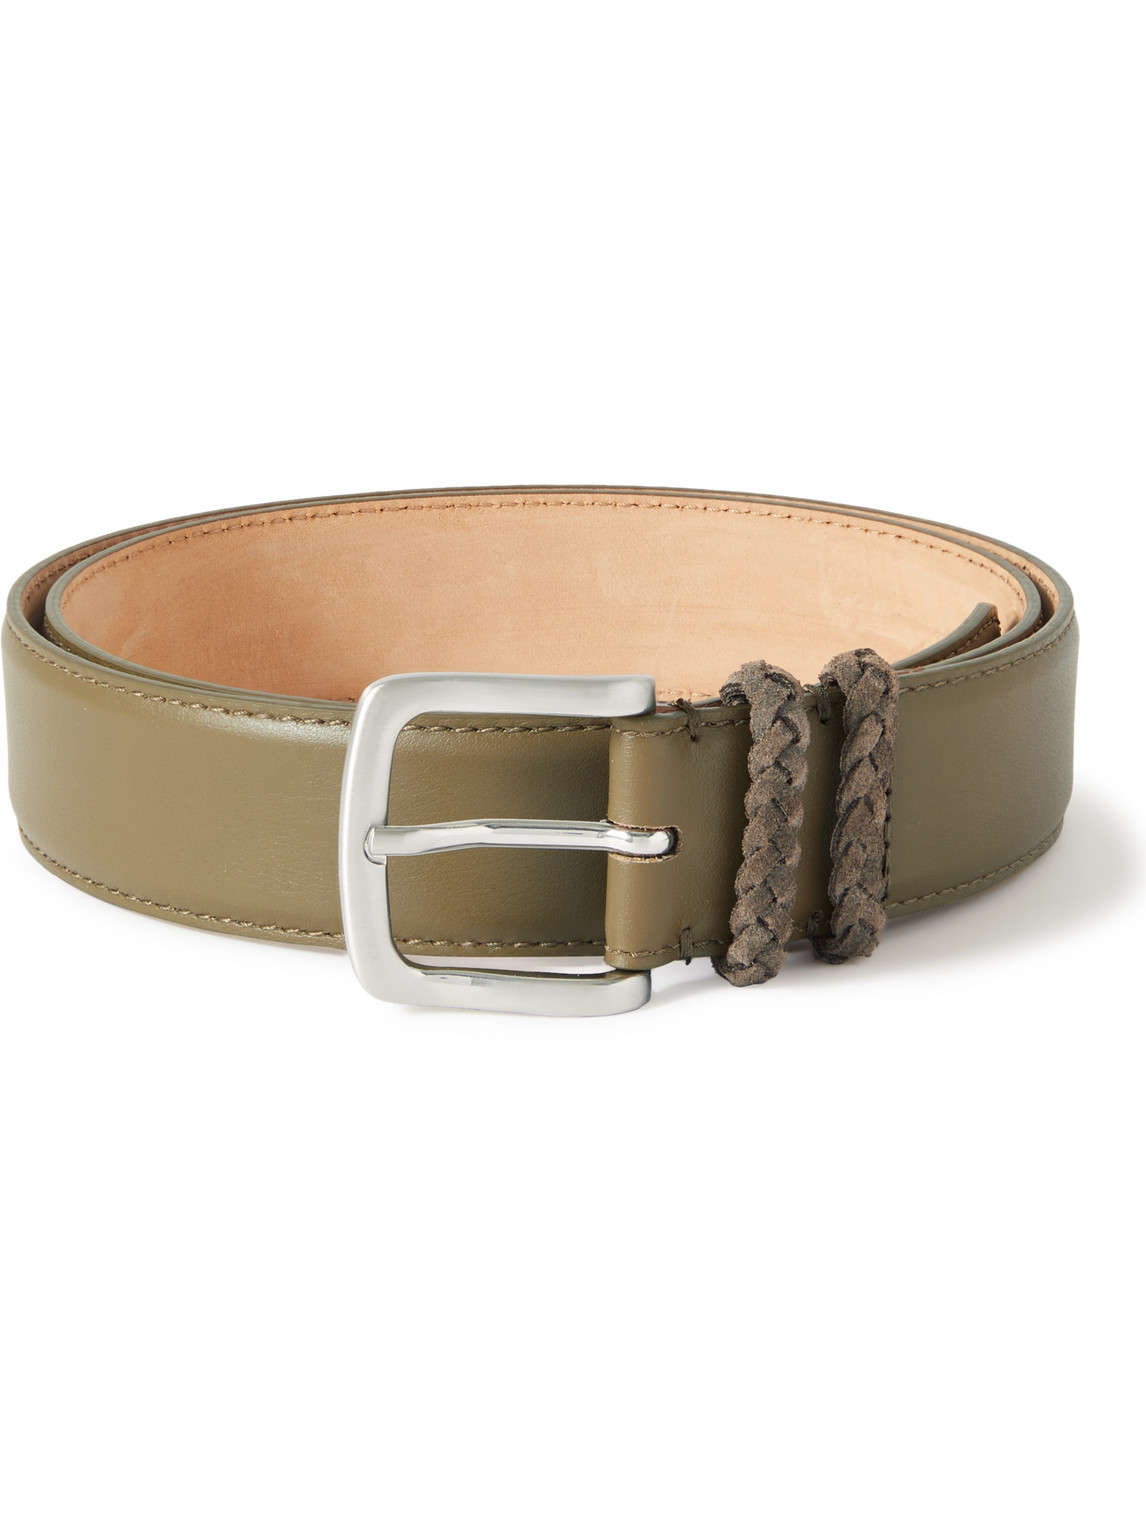 Mr P 3.5cm Leather Belt In Green